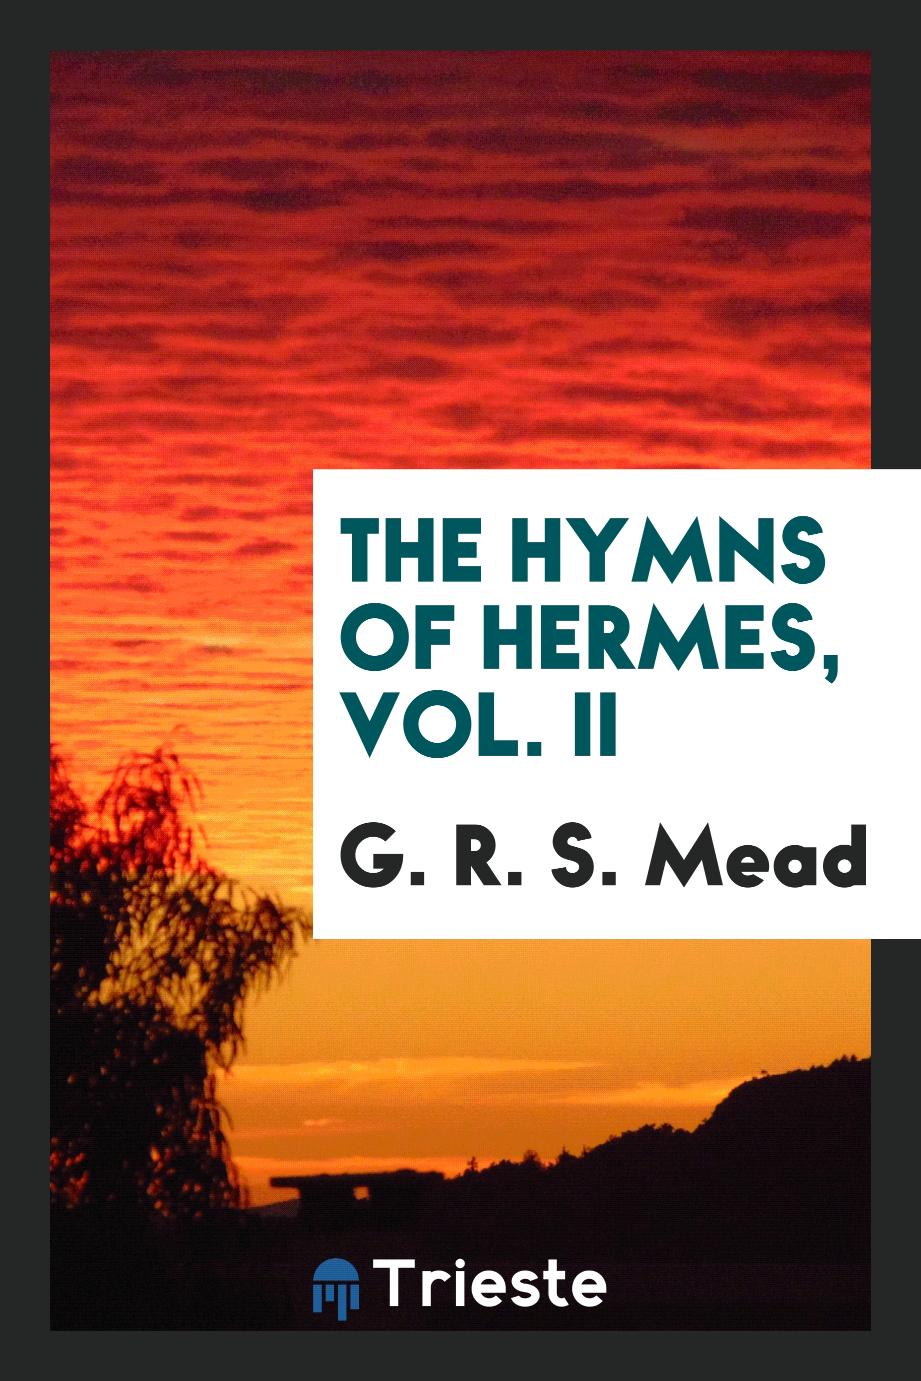 The Hymns of Hermes, vol. II